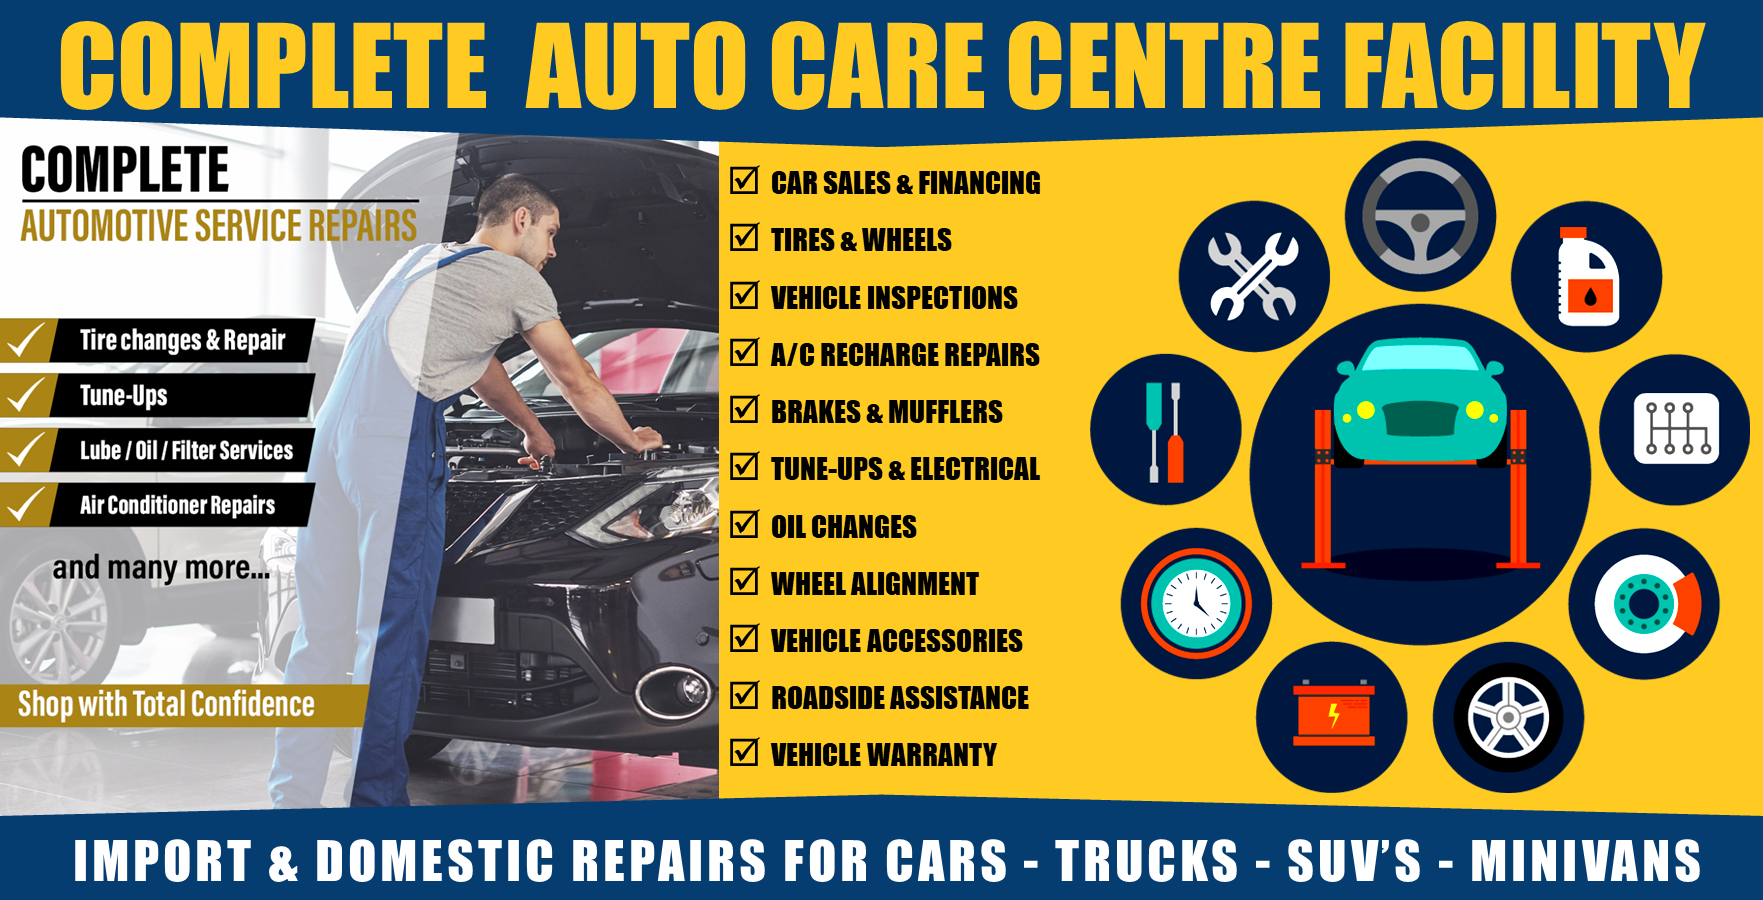 Complete automotive service repairs.